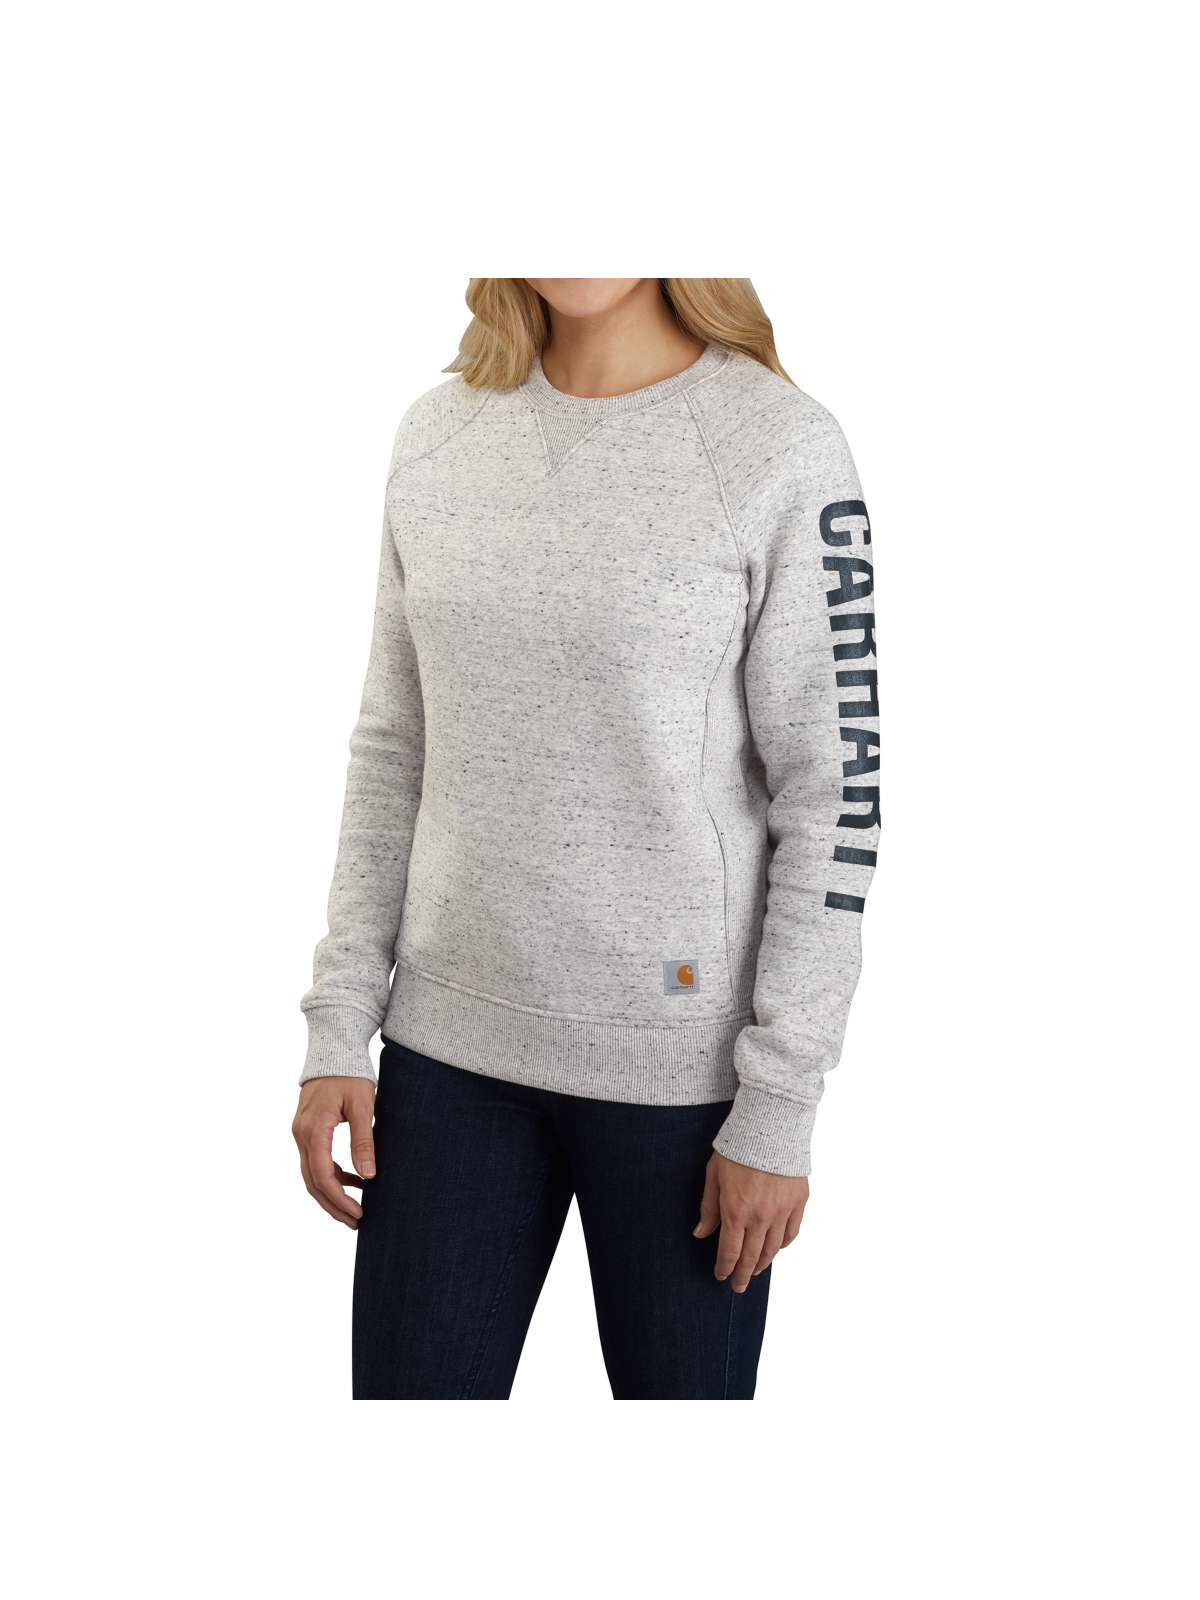 Пуловер CARHARTT Sweatshirt, серый пуловер carhartt lightweight crewneck серый